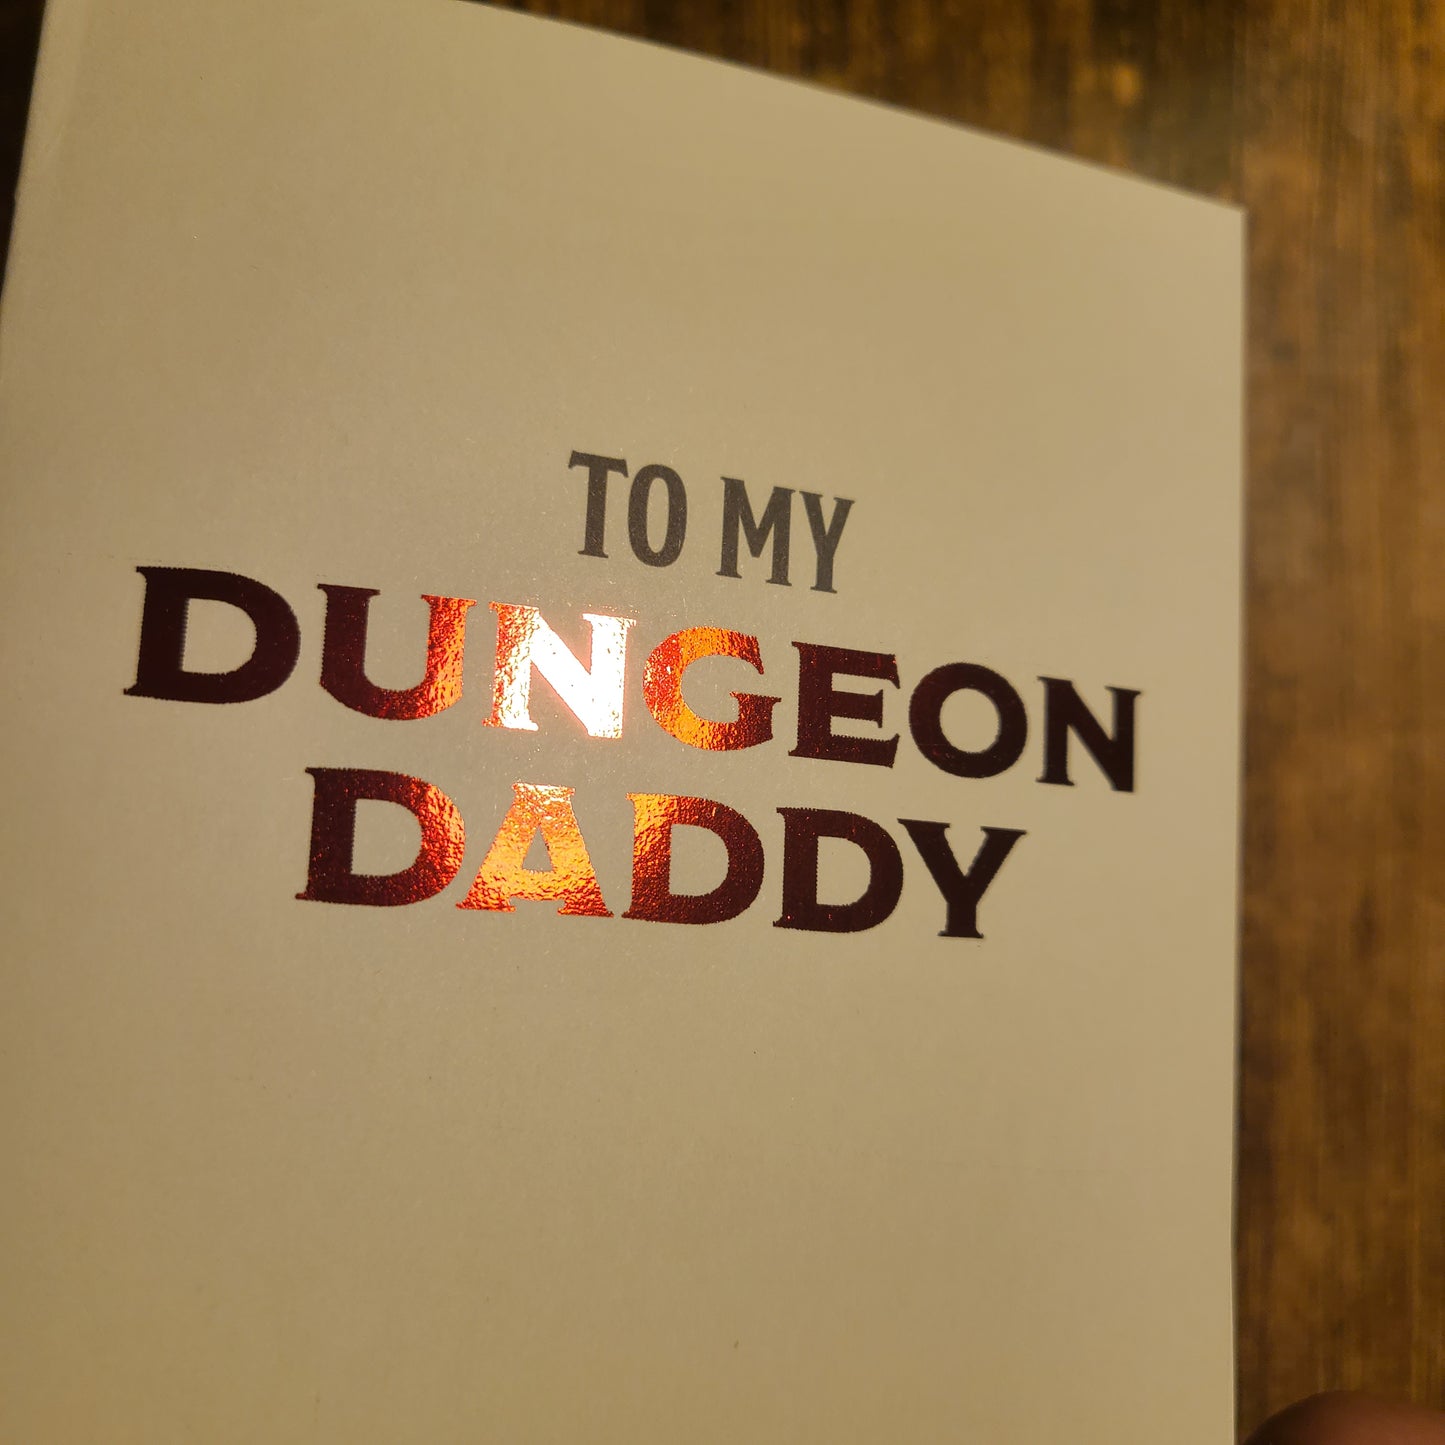 Dungeon Daddy